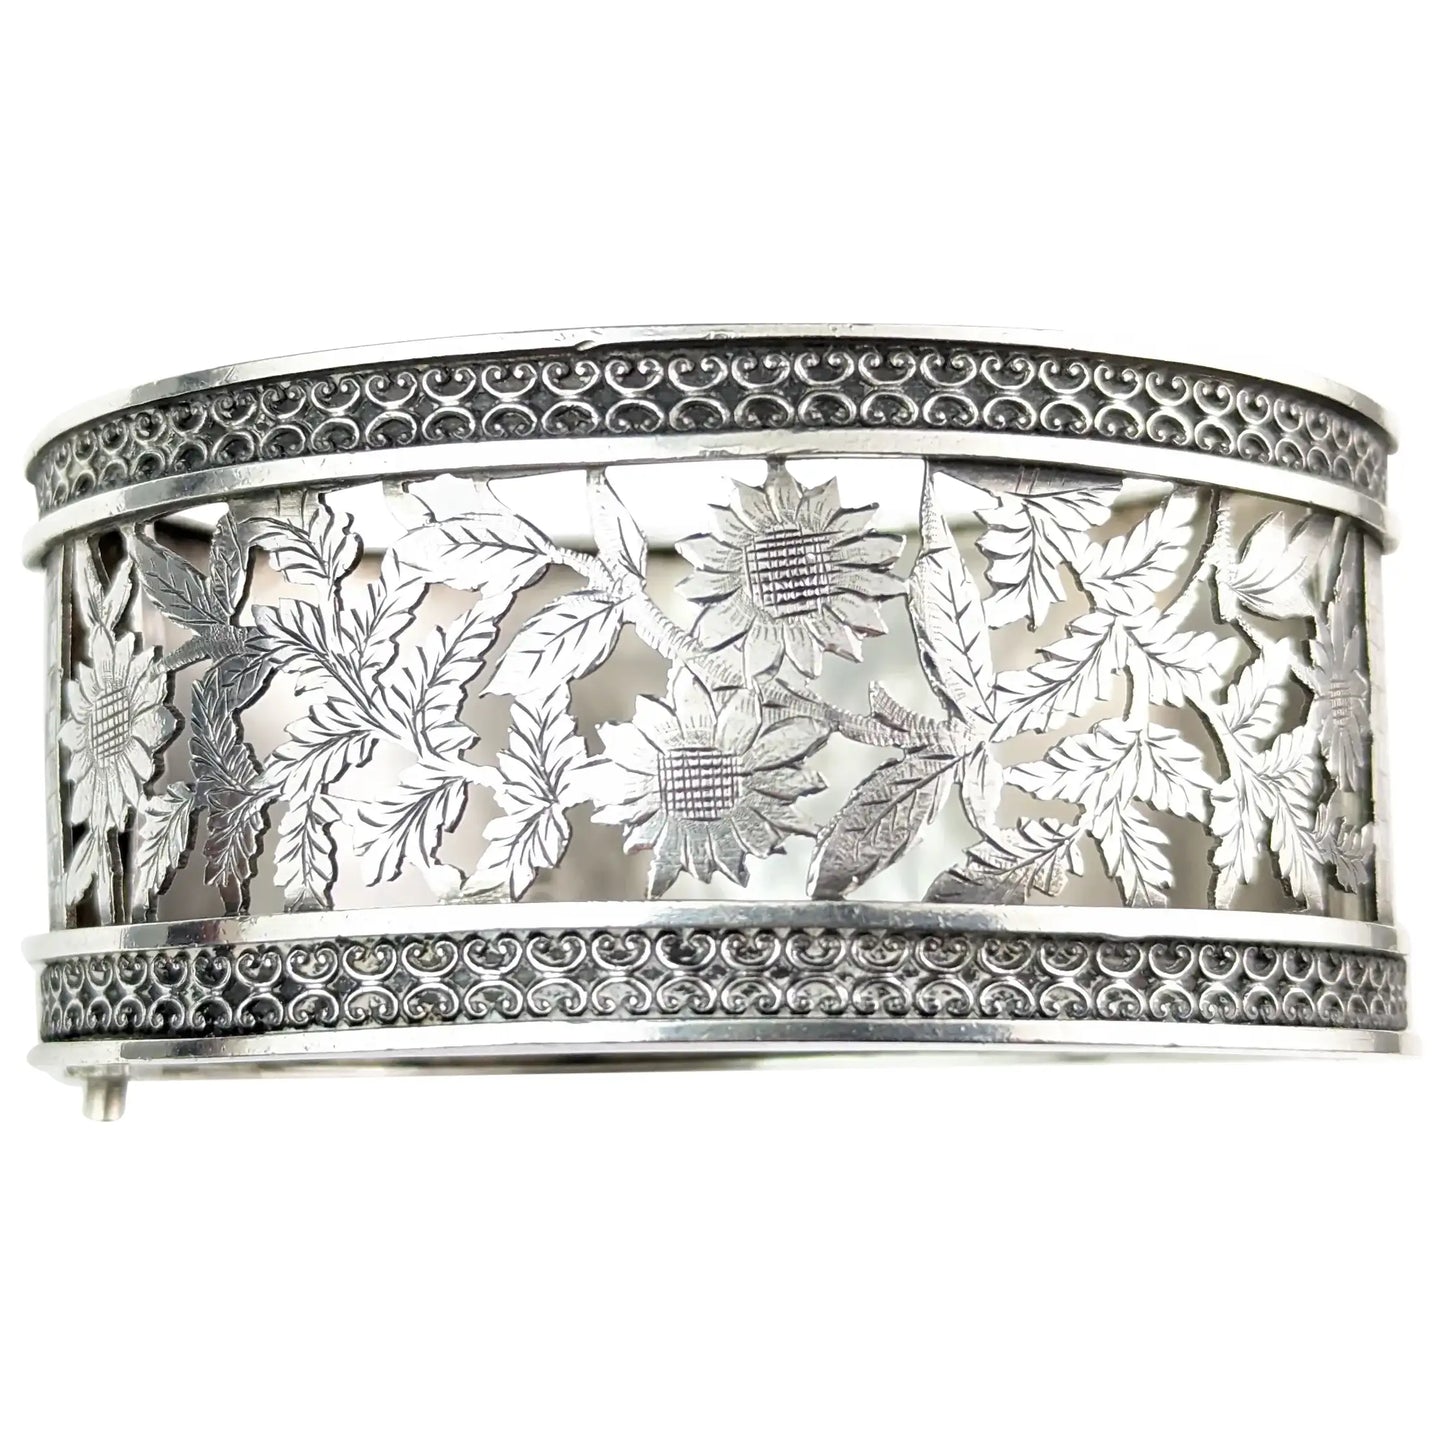 Antique Victorian silver cuff bangle, pierced floral design, Monogrammed